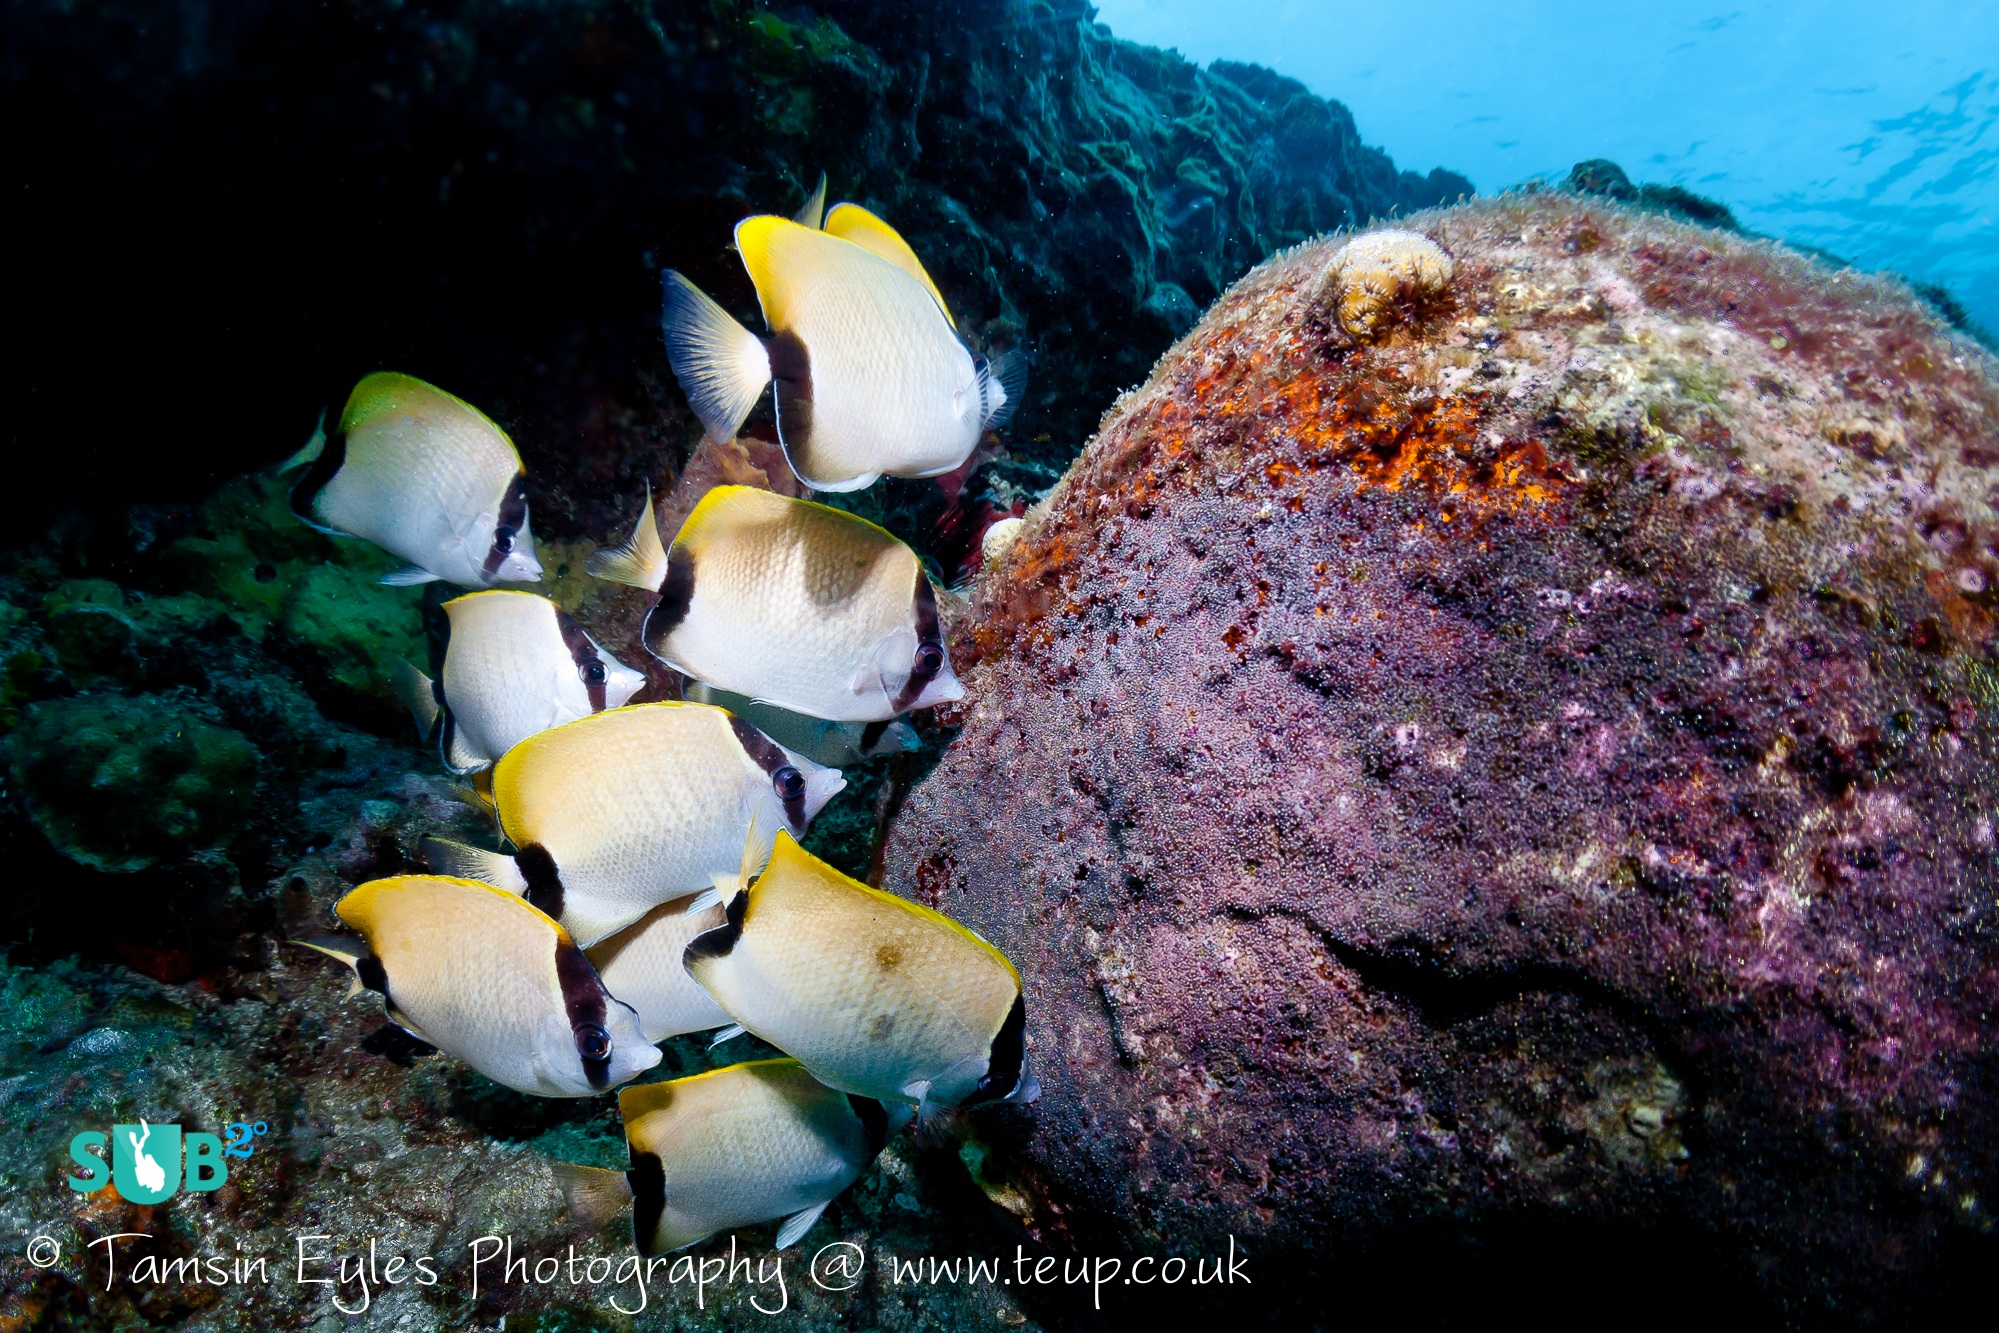 这些活跃的珊瑚礁鲽鱼被吃the sergeant major's purple eggs. Photo courtesy of Tamsin Eyles.